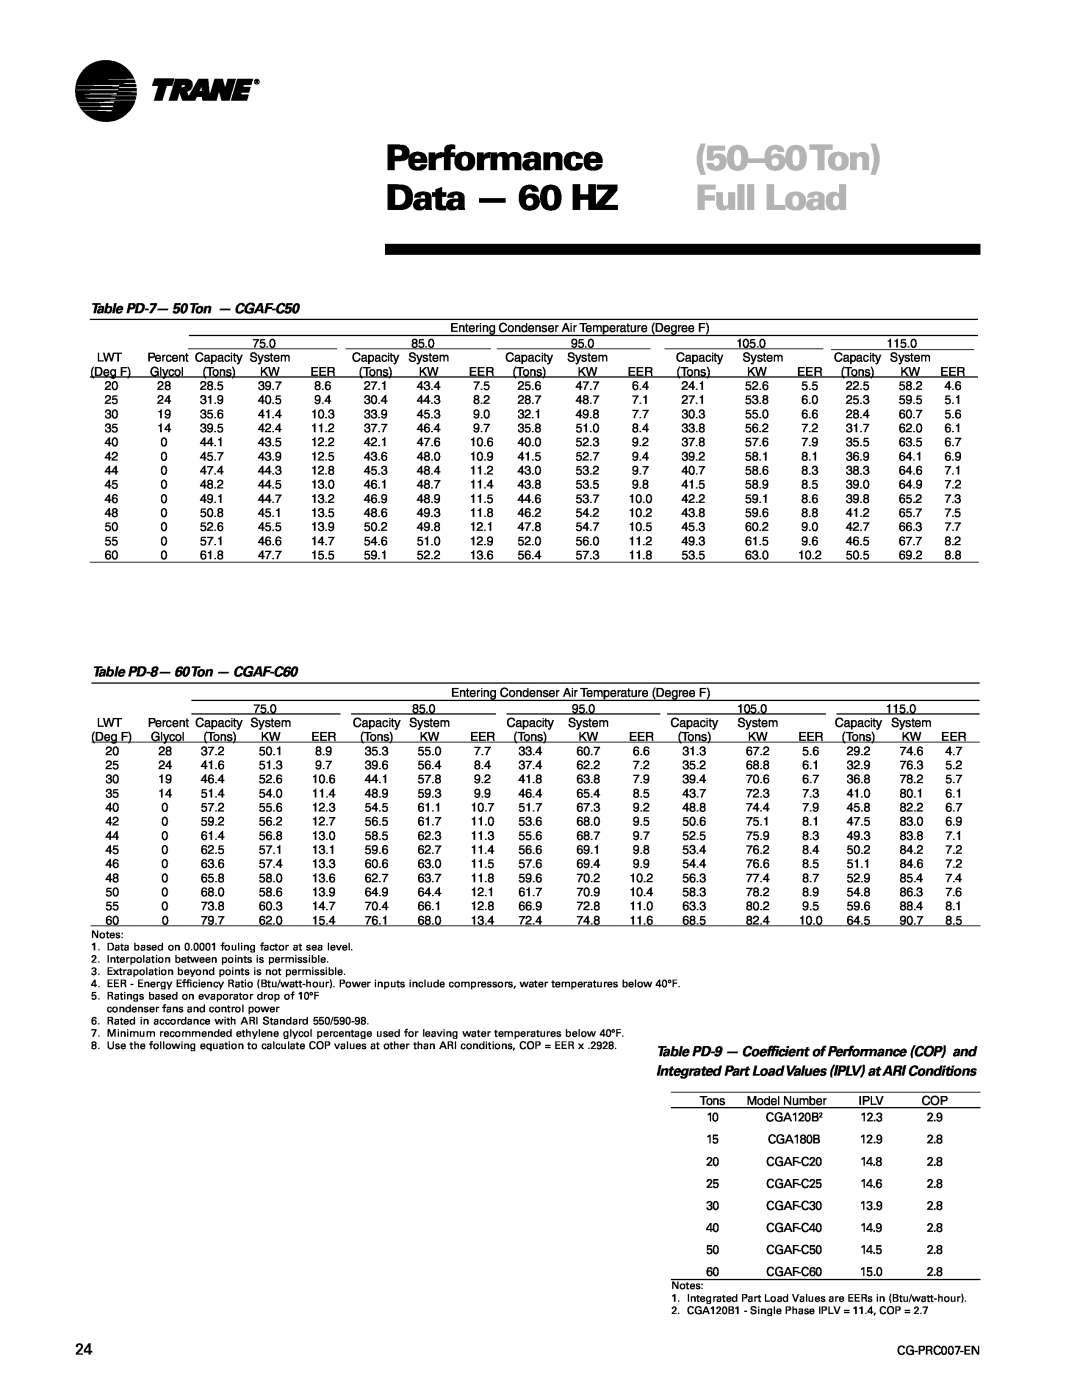 Trane CG-PRC007-EN manual 50-60Ton, Performance, Data - 60 HZ, Full Load, Table PD-7-50Ton - CGAF-C50 